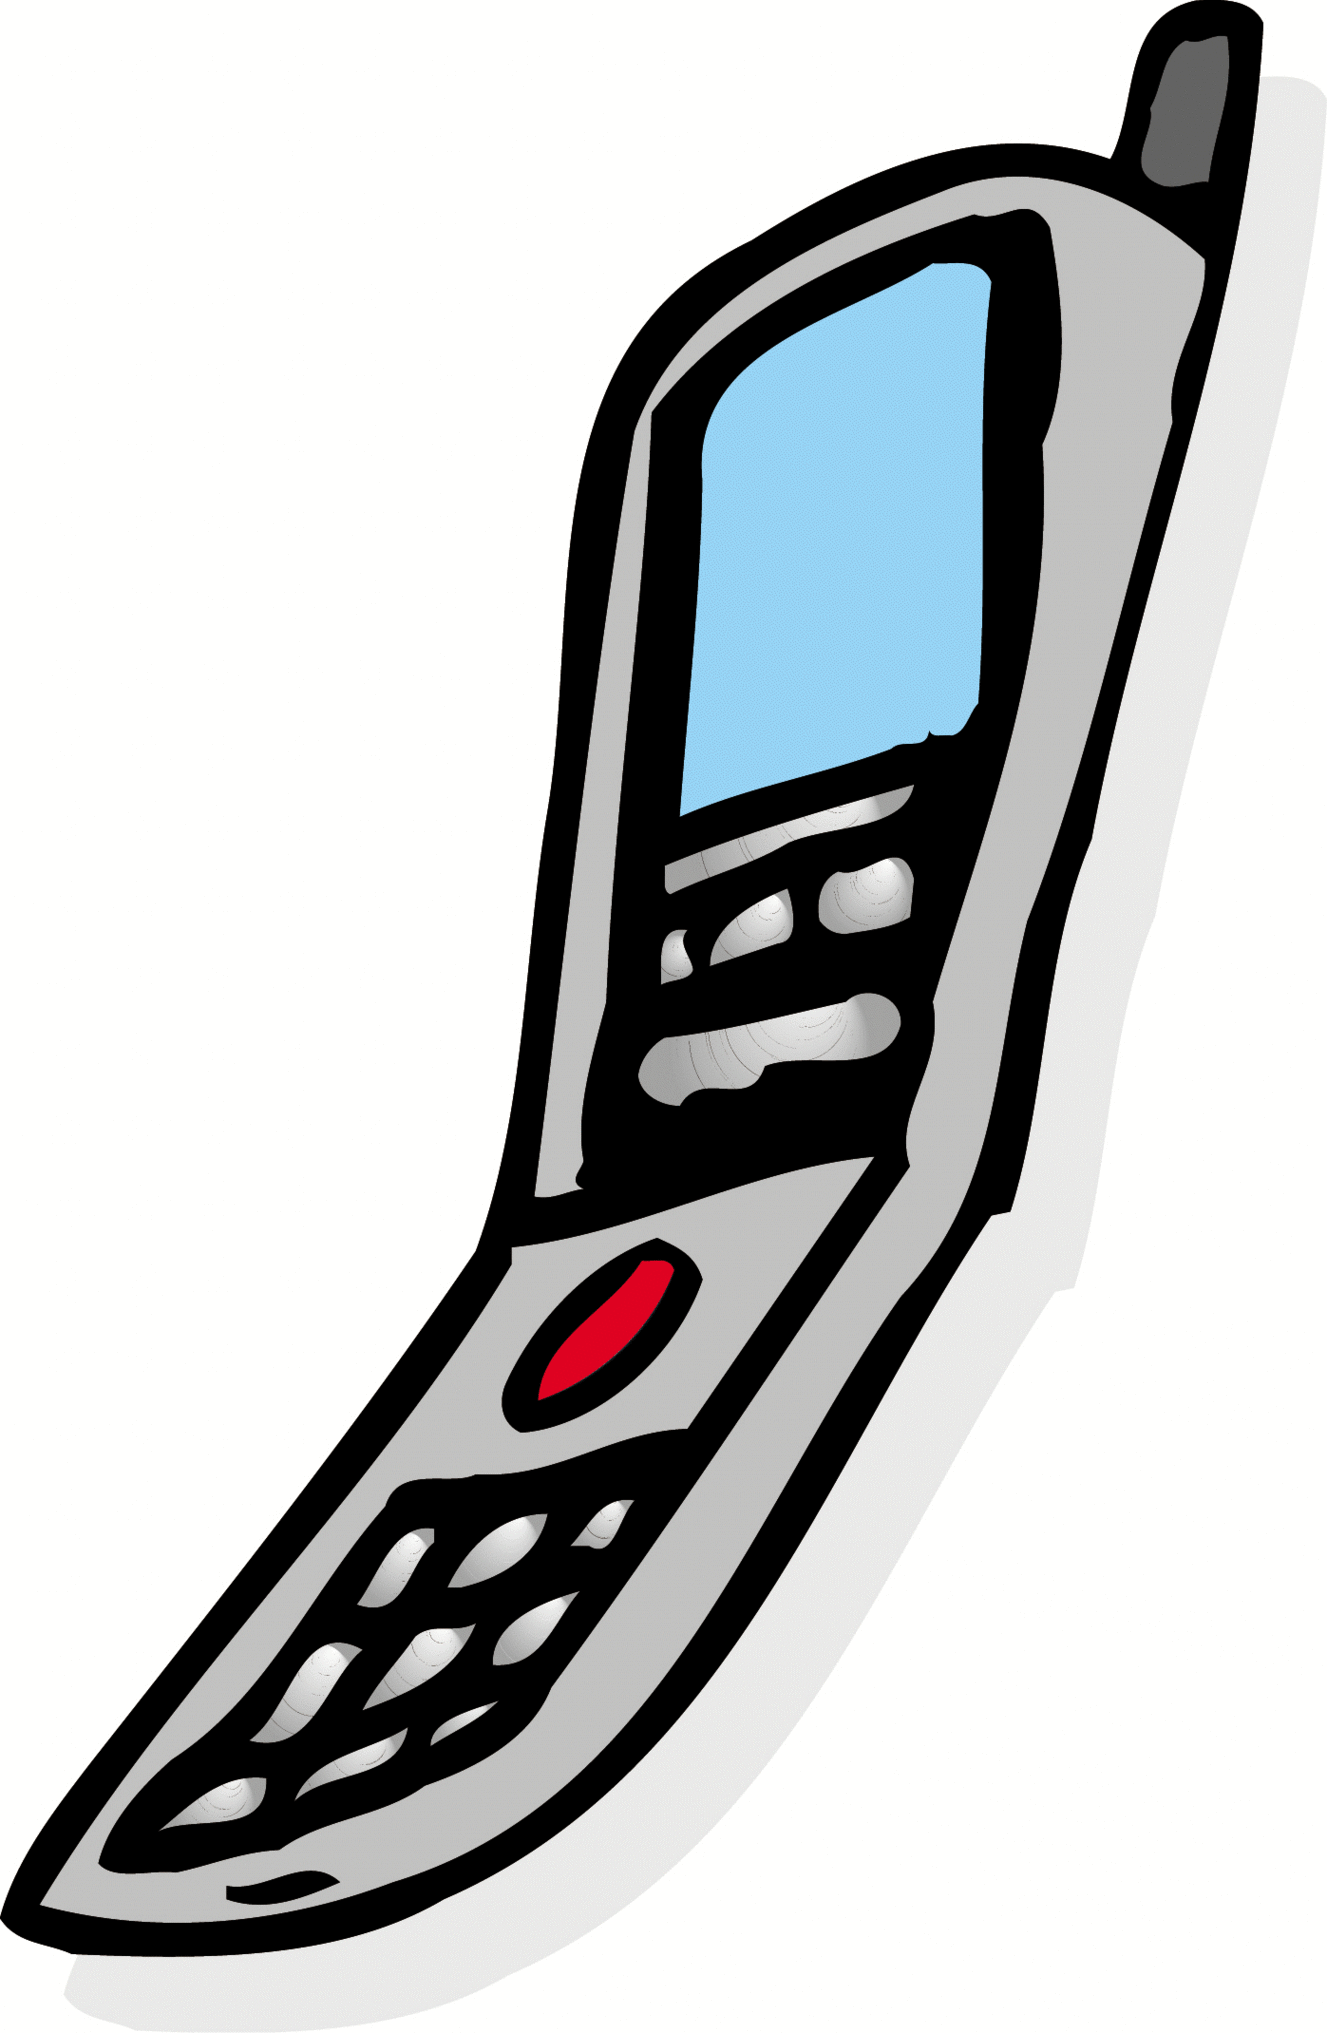 clip art of phone ringing - photo #18